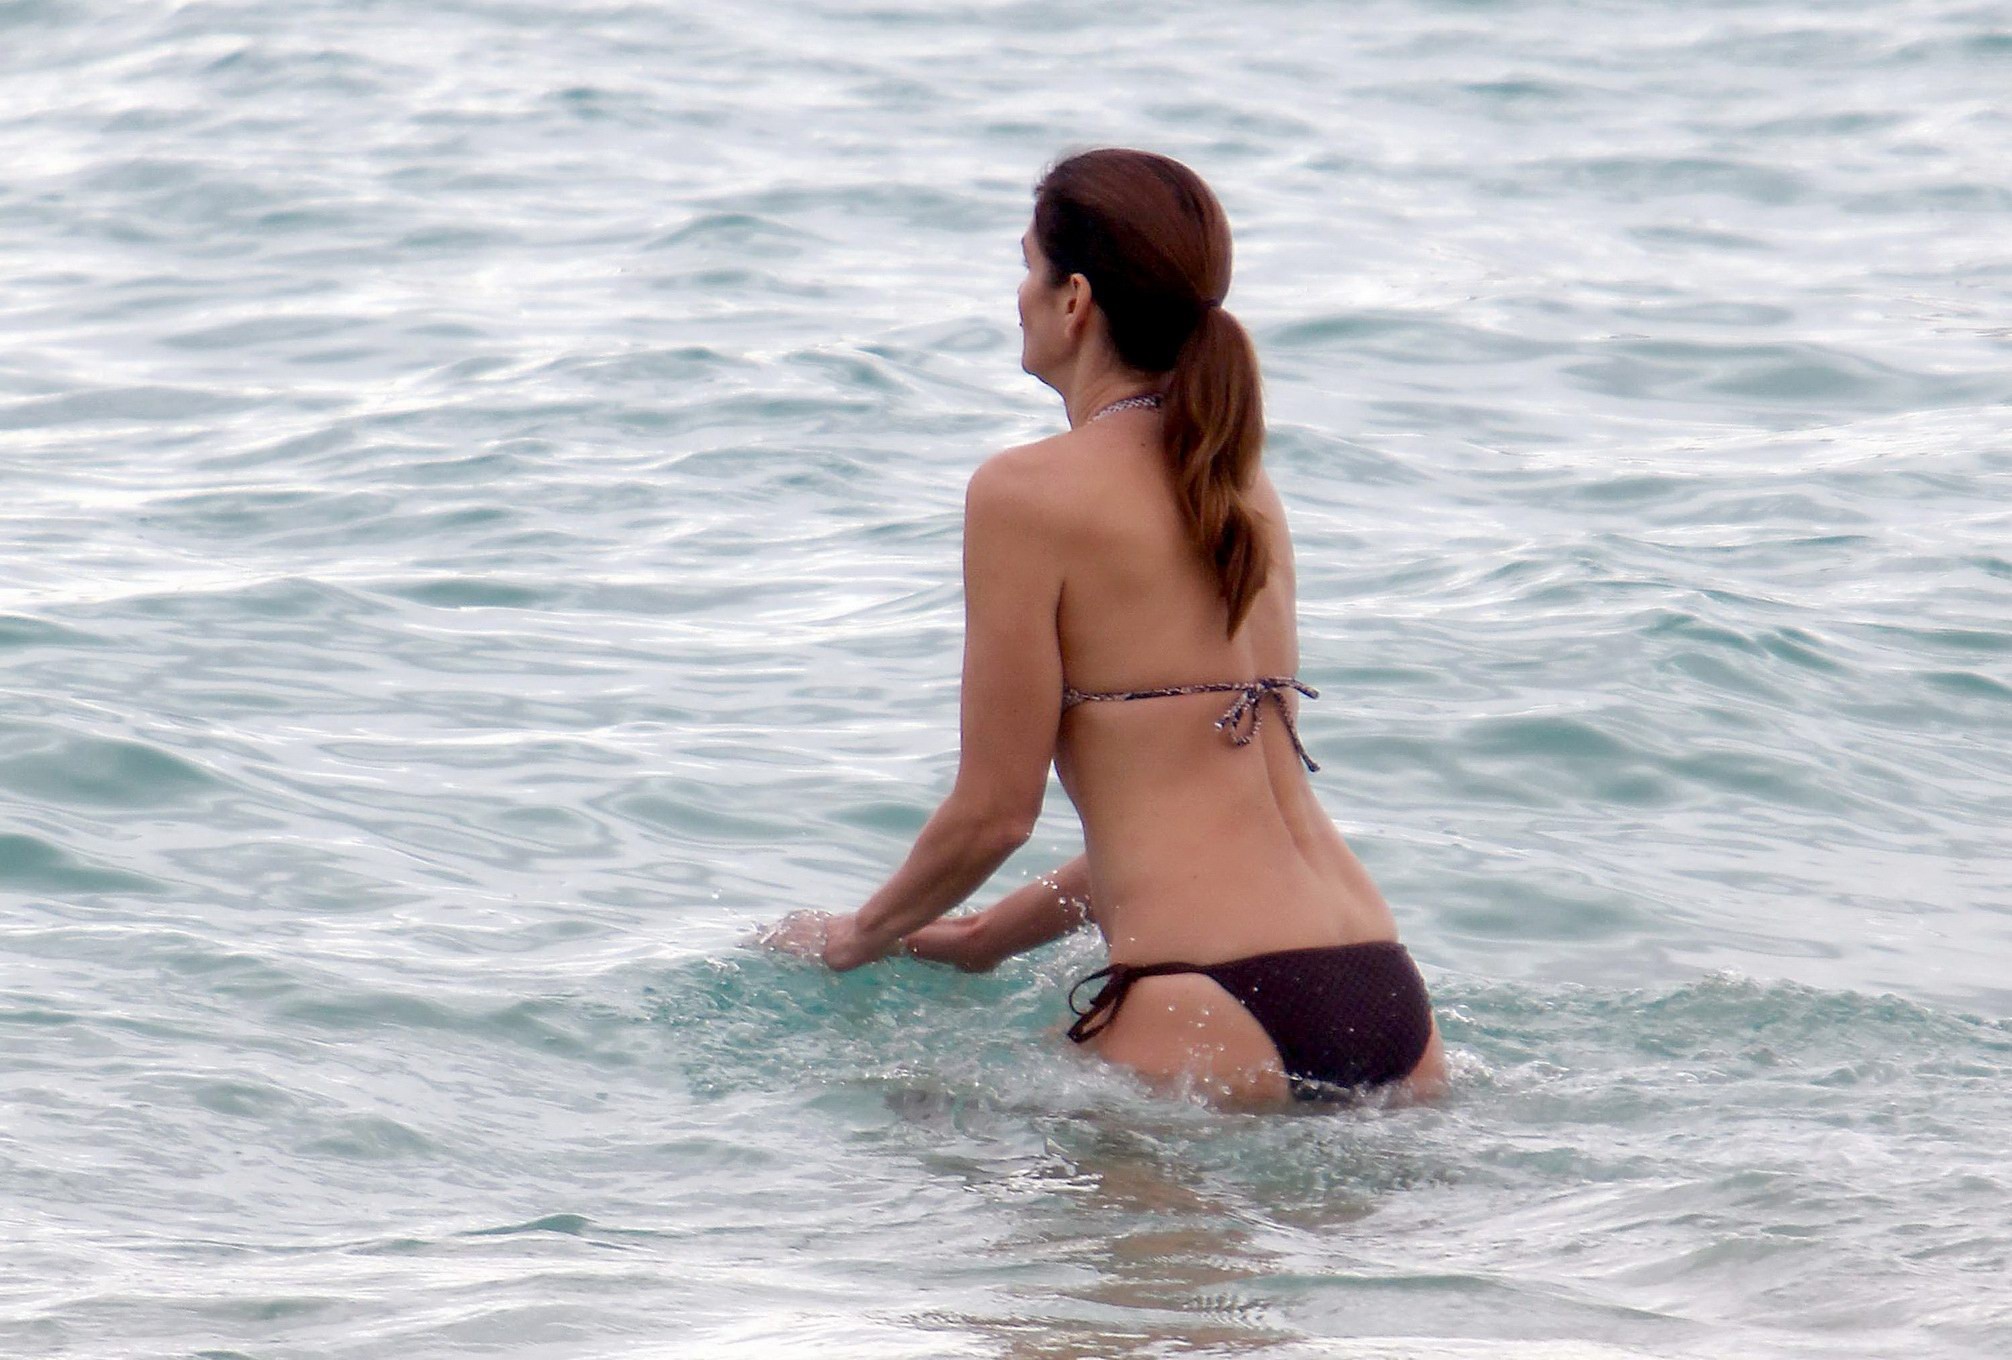 Cindy crawford portant un bikini imprimé serpent à Cabo san lucas
 #75281185